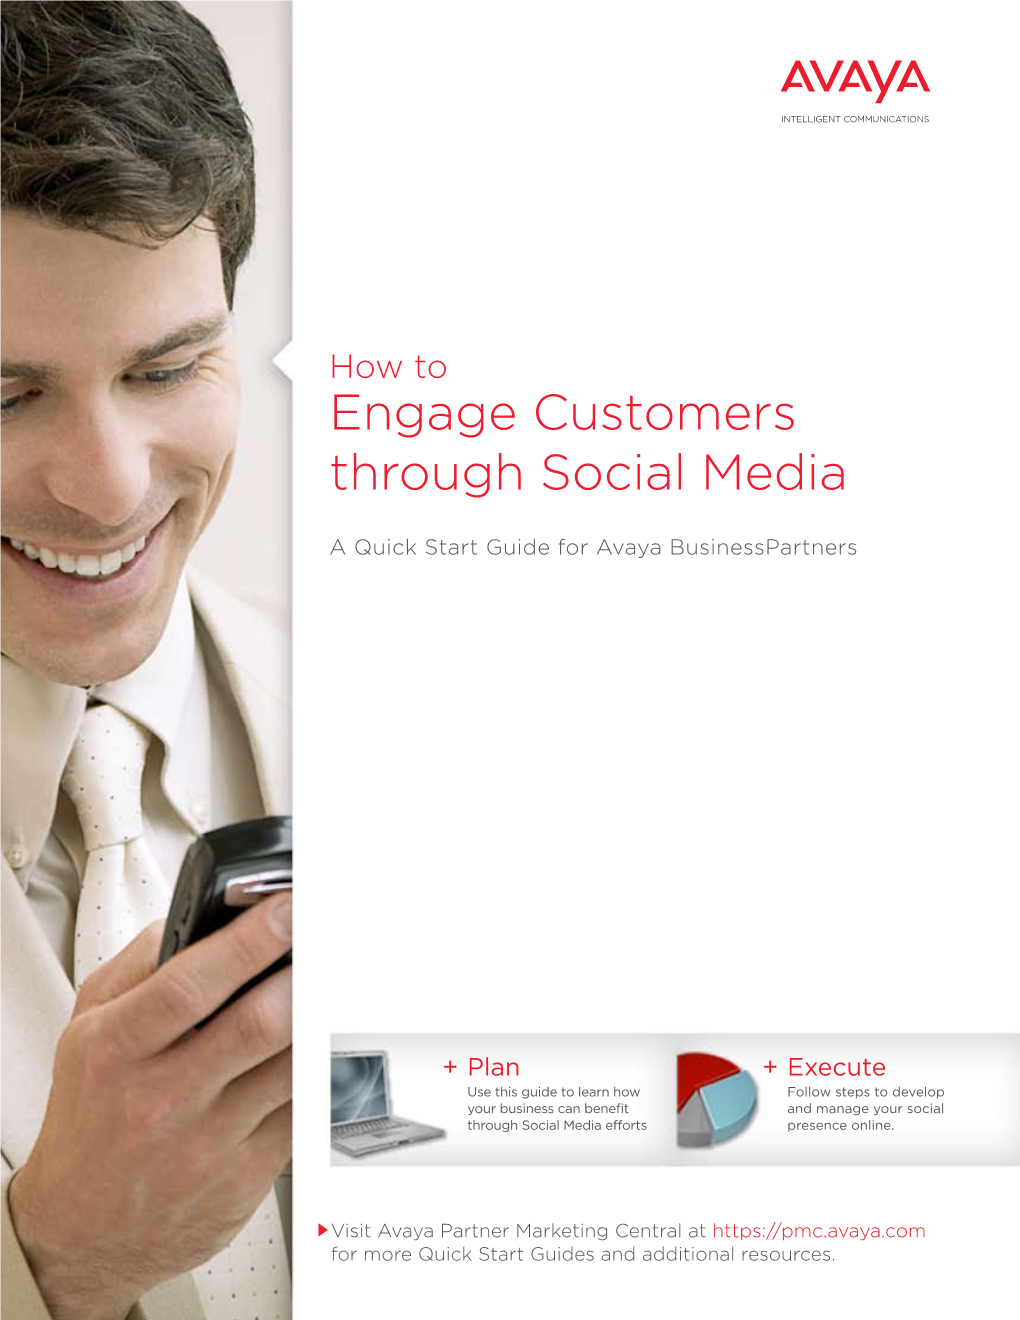 Engage Customers Through Social Media